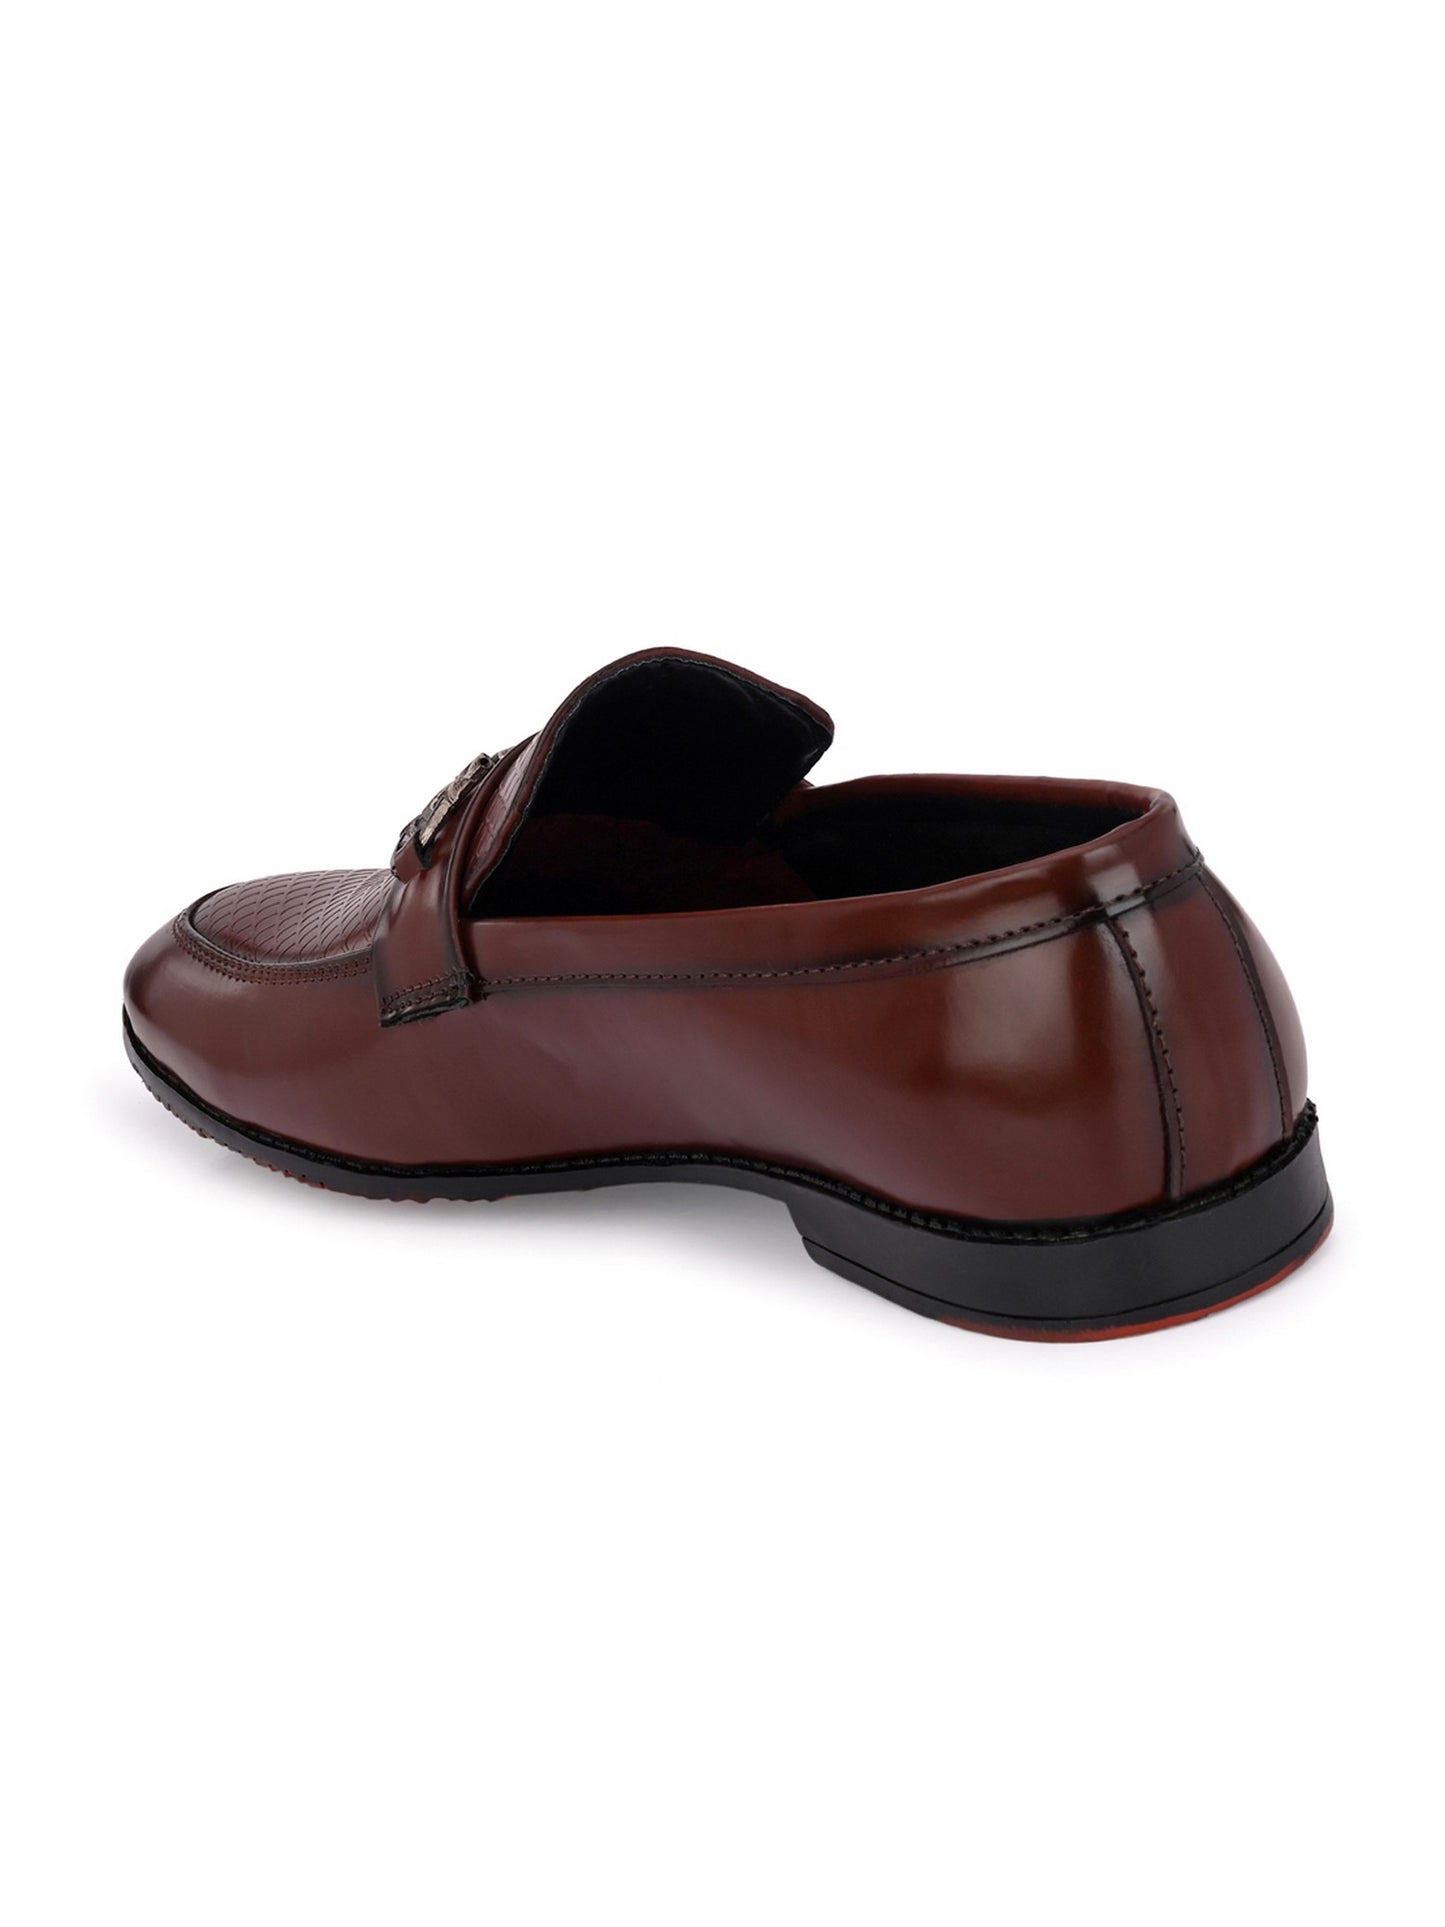 Guava Men's Brown Slip On Party Formal Shoes (GV15JA791)